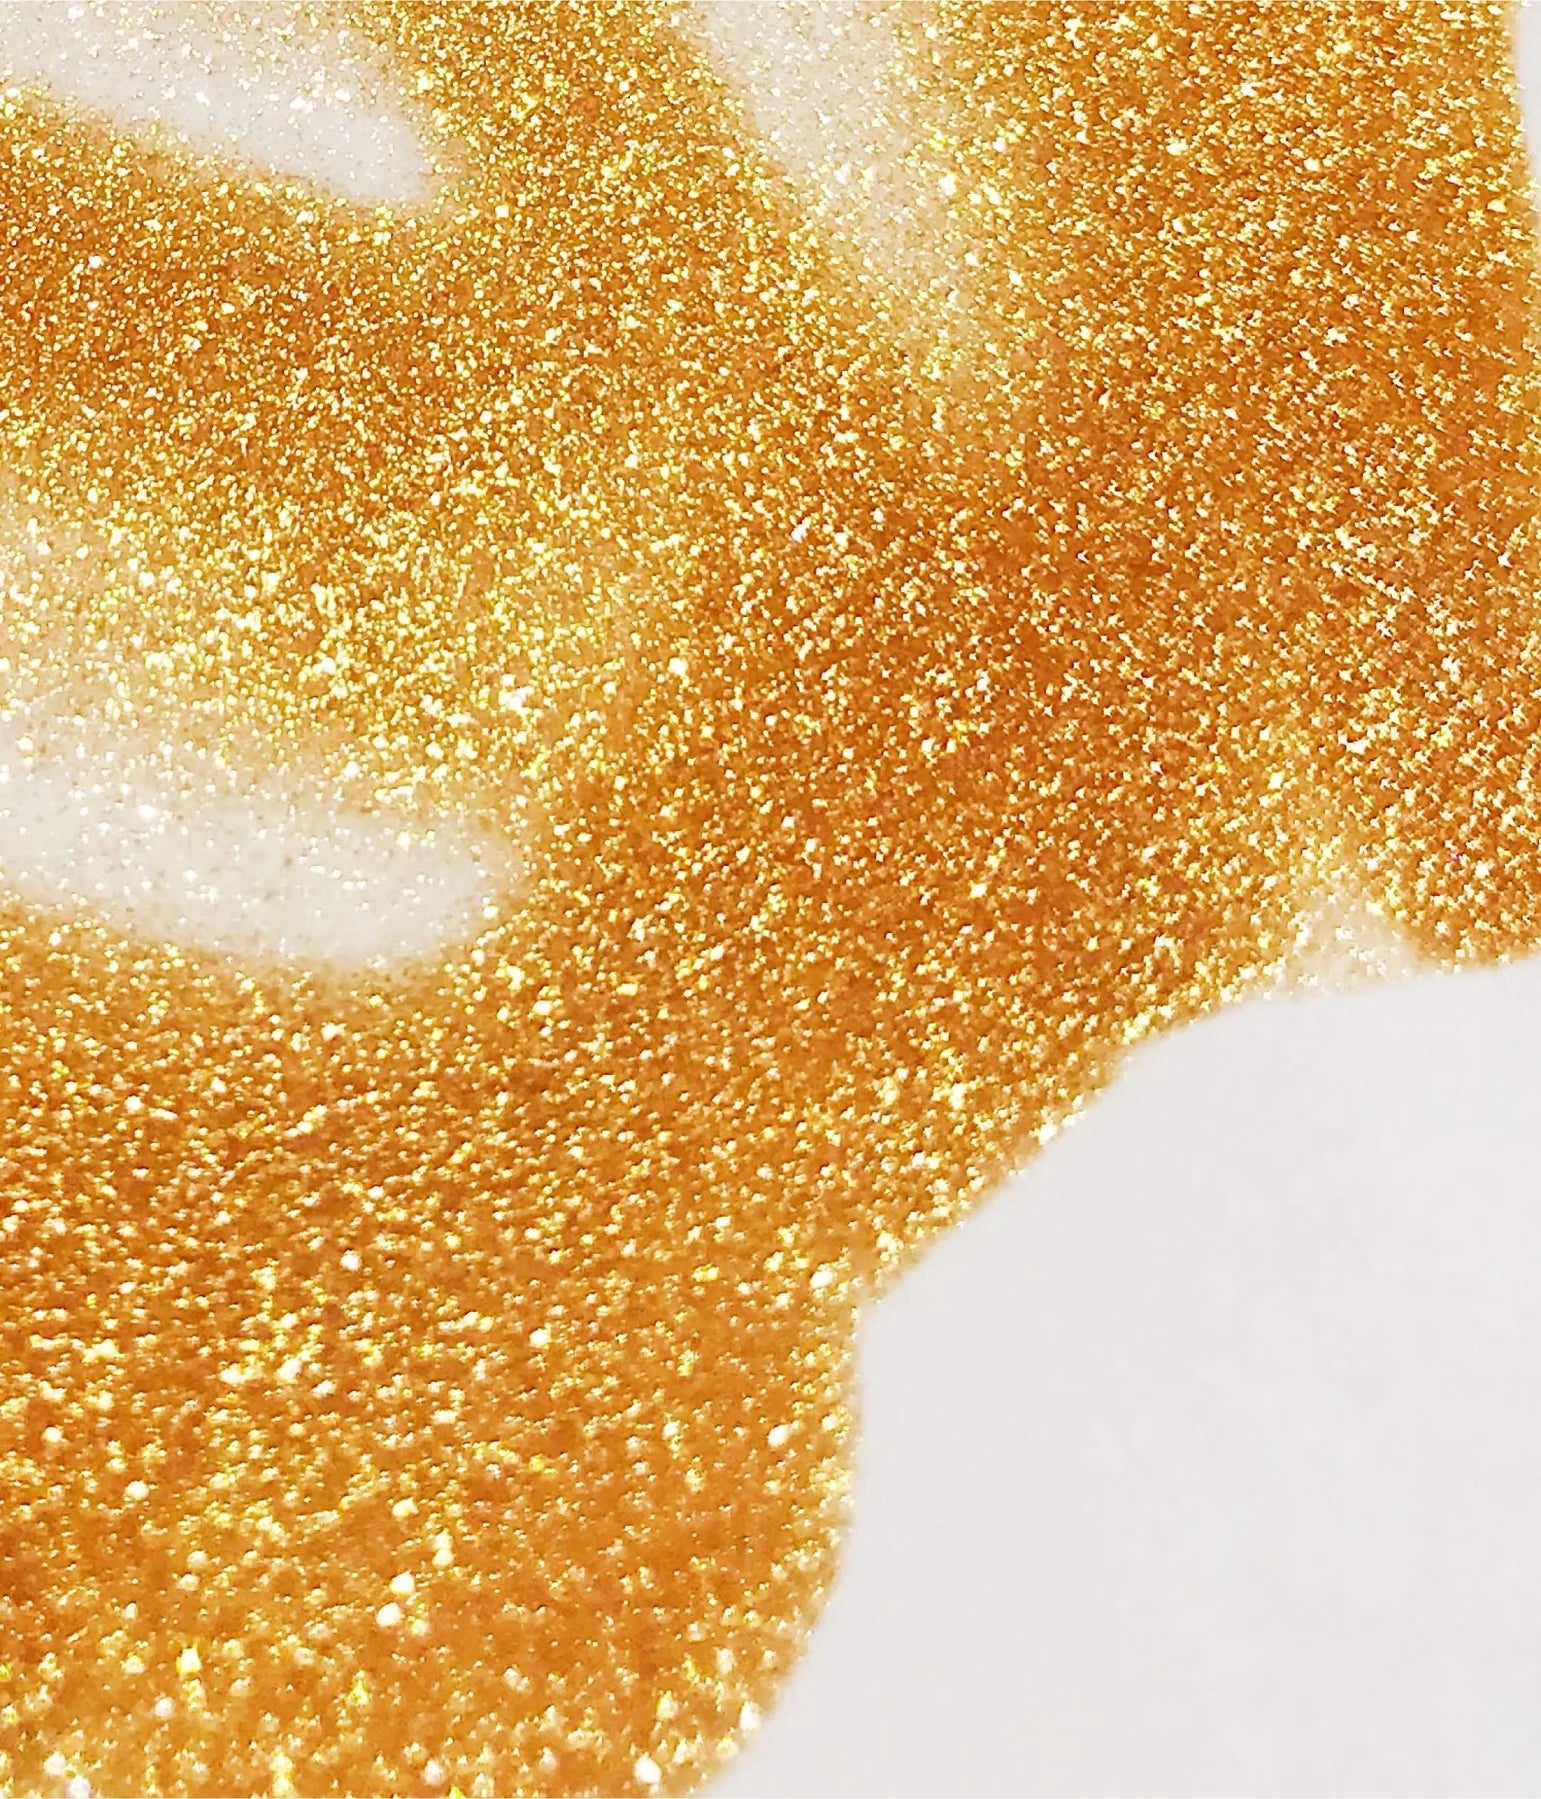 Artifact - Mèr-Mèr Monoï White Gold Shimmering Dry Body Oil